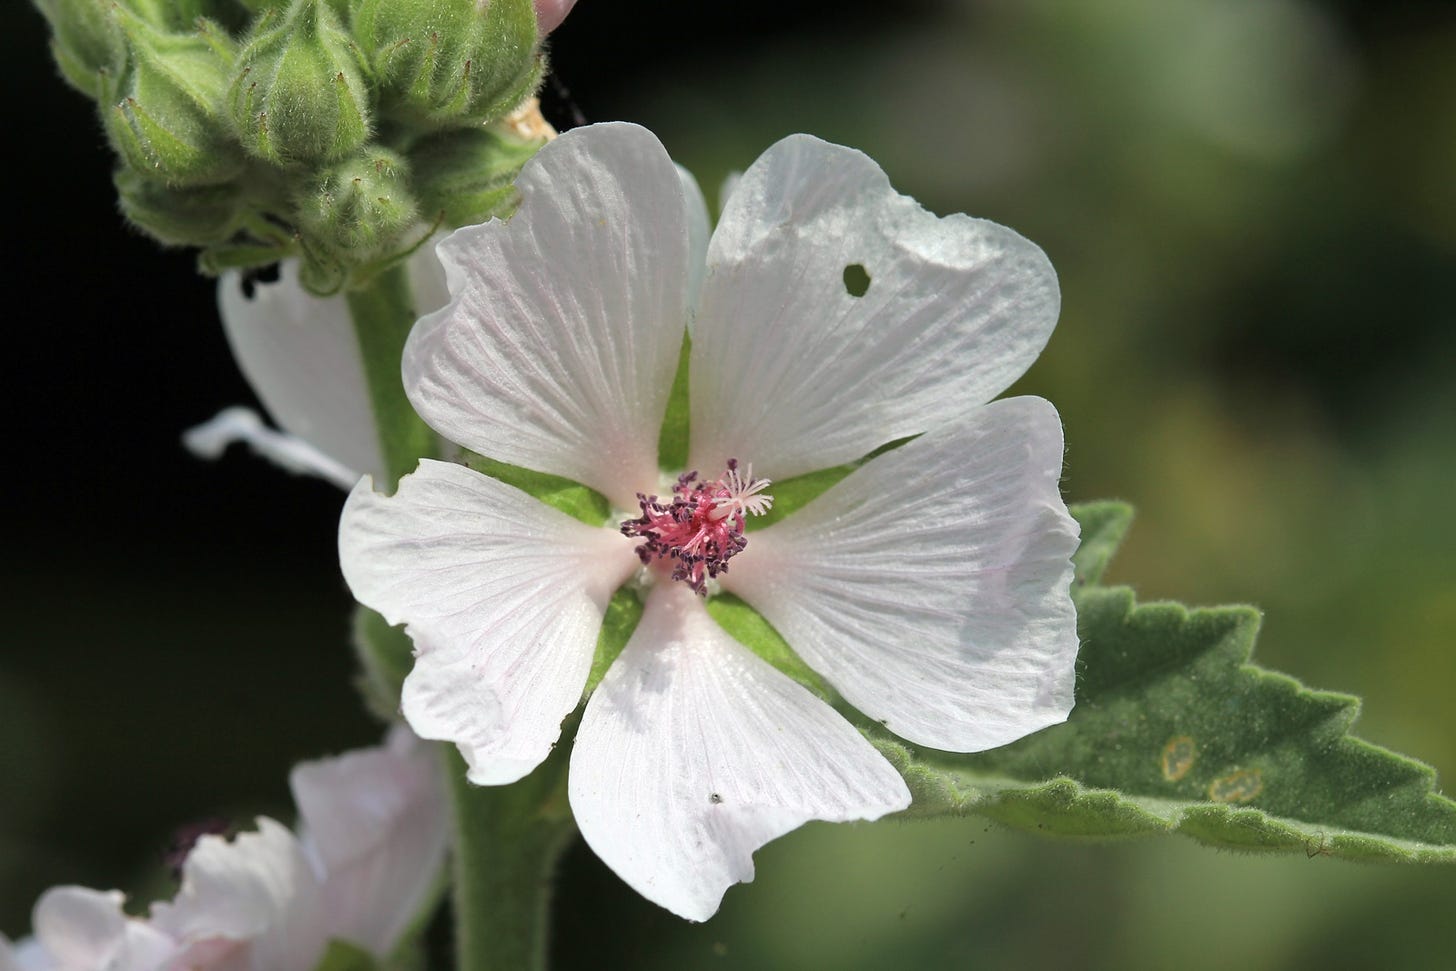 Close-up of 5 open petalled flower on stem